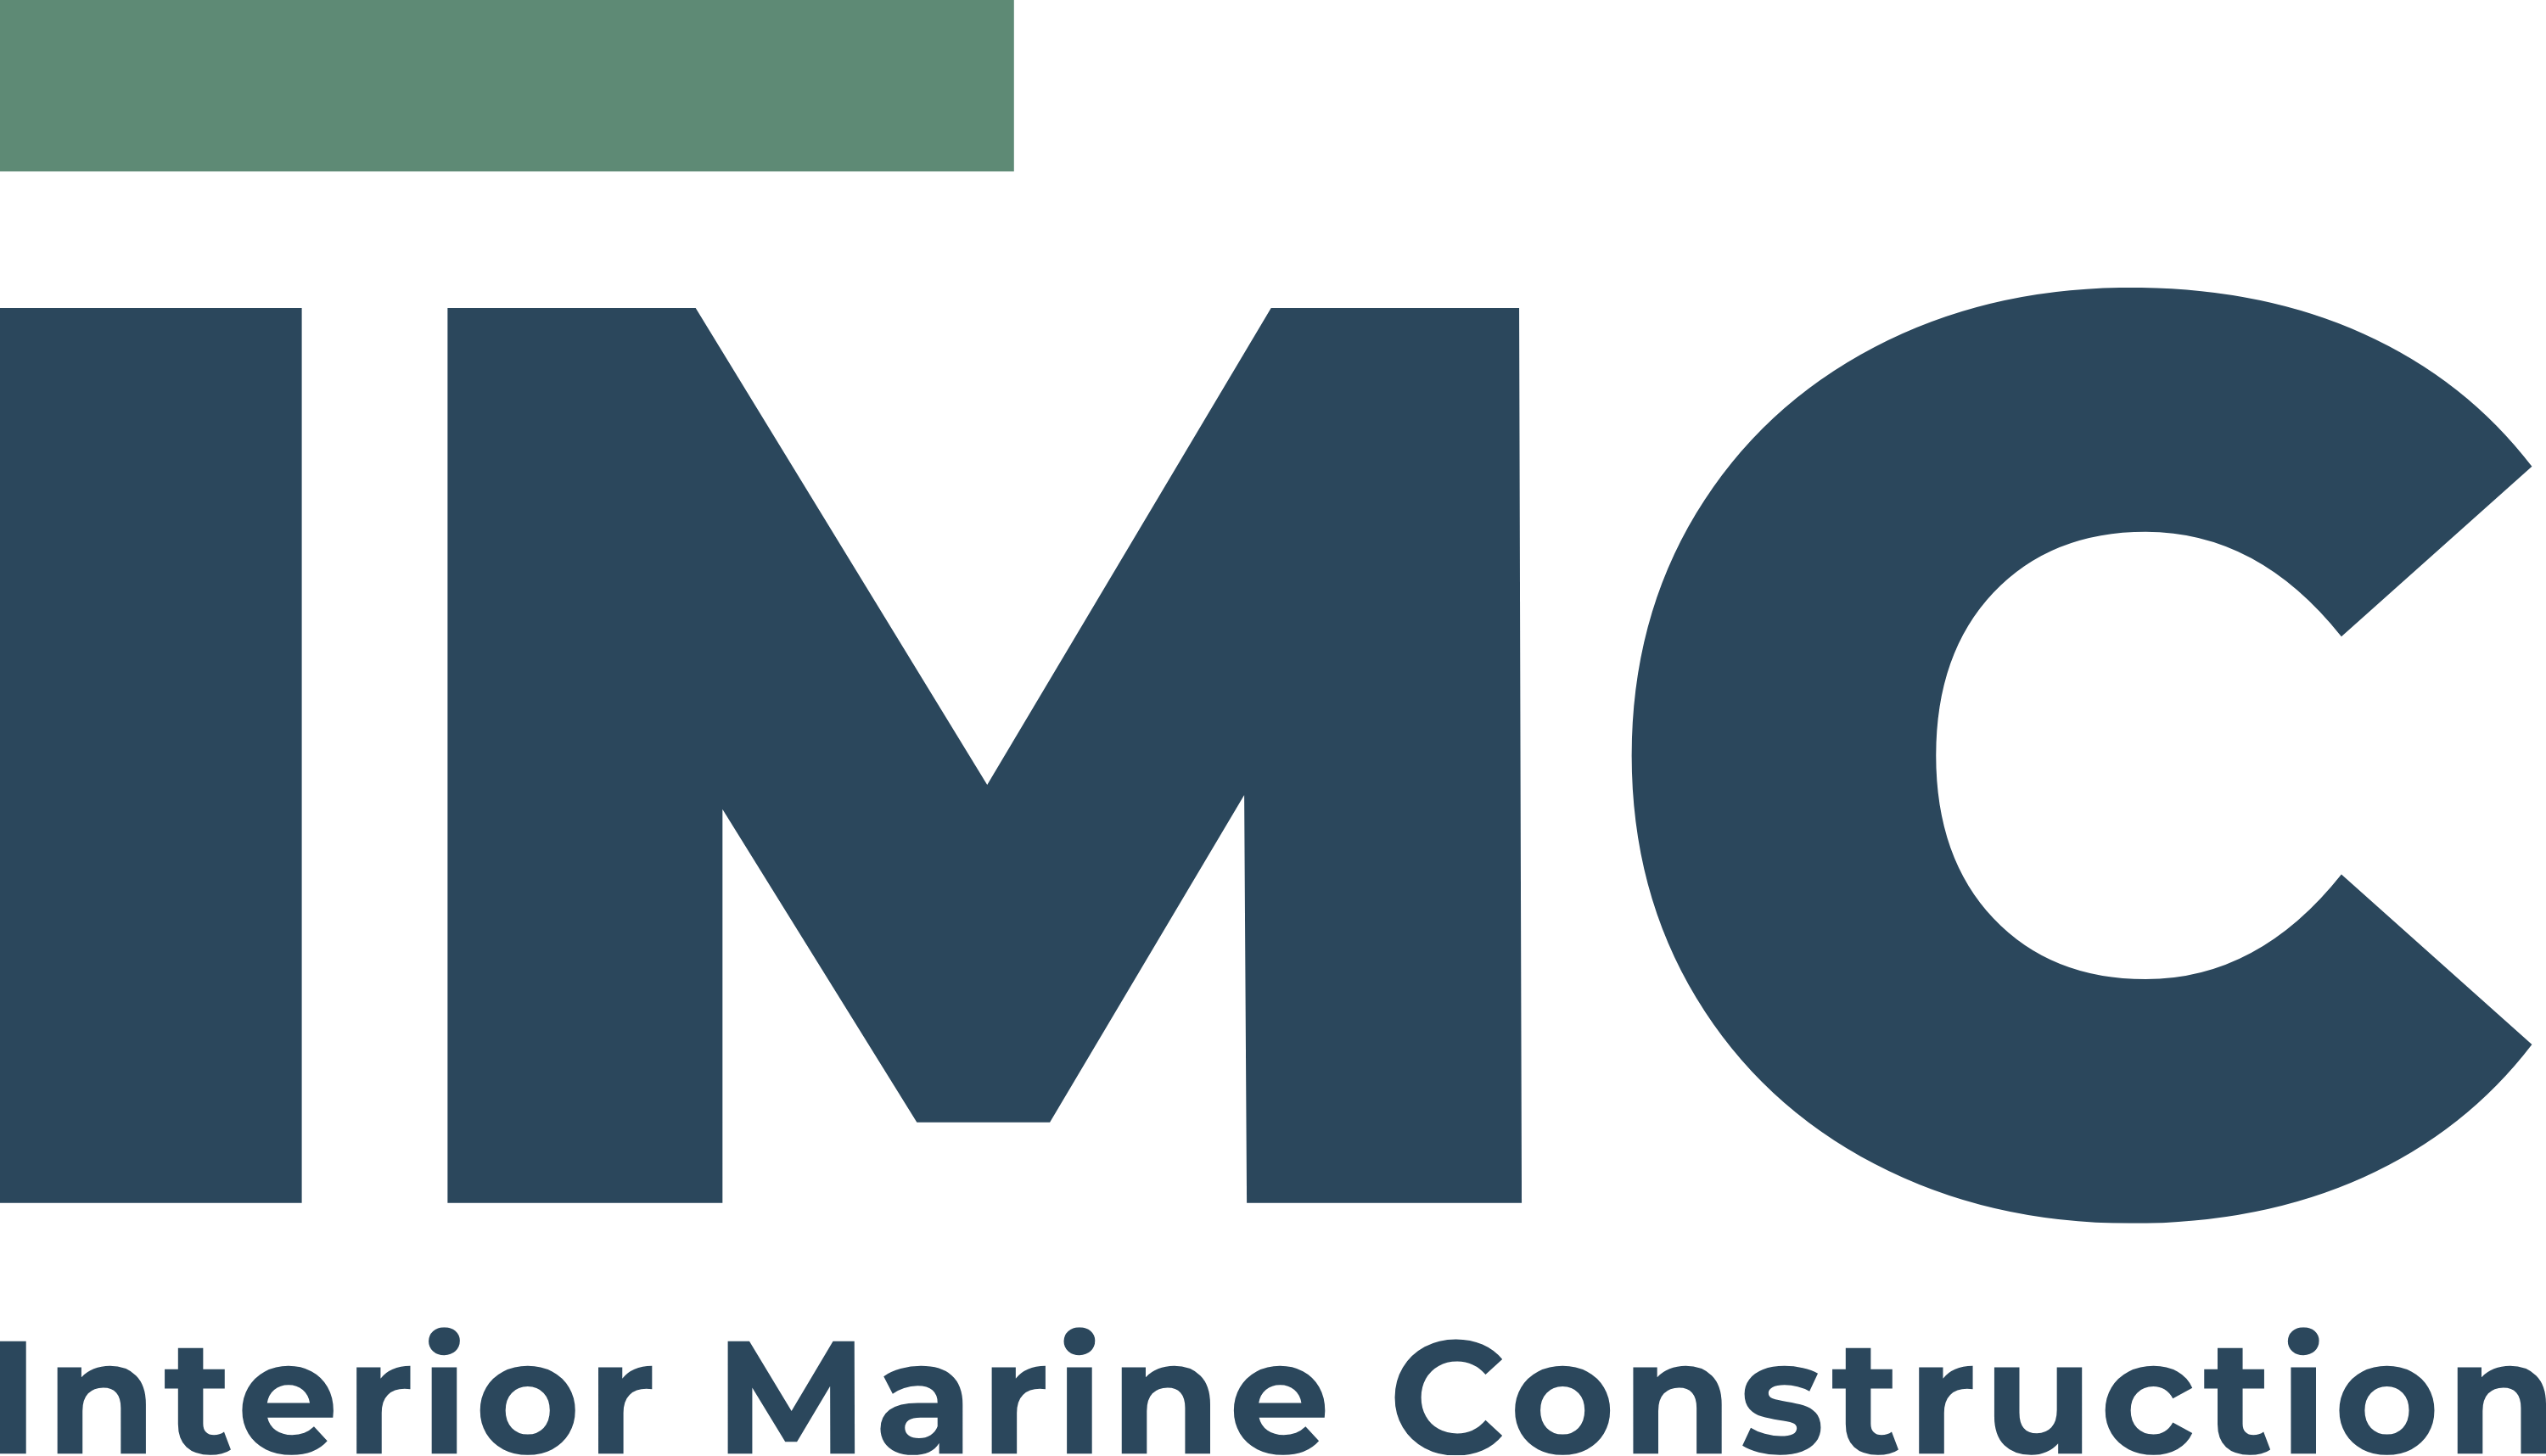 Interior Marine Construction Ltd